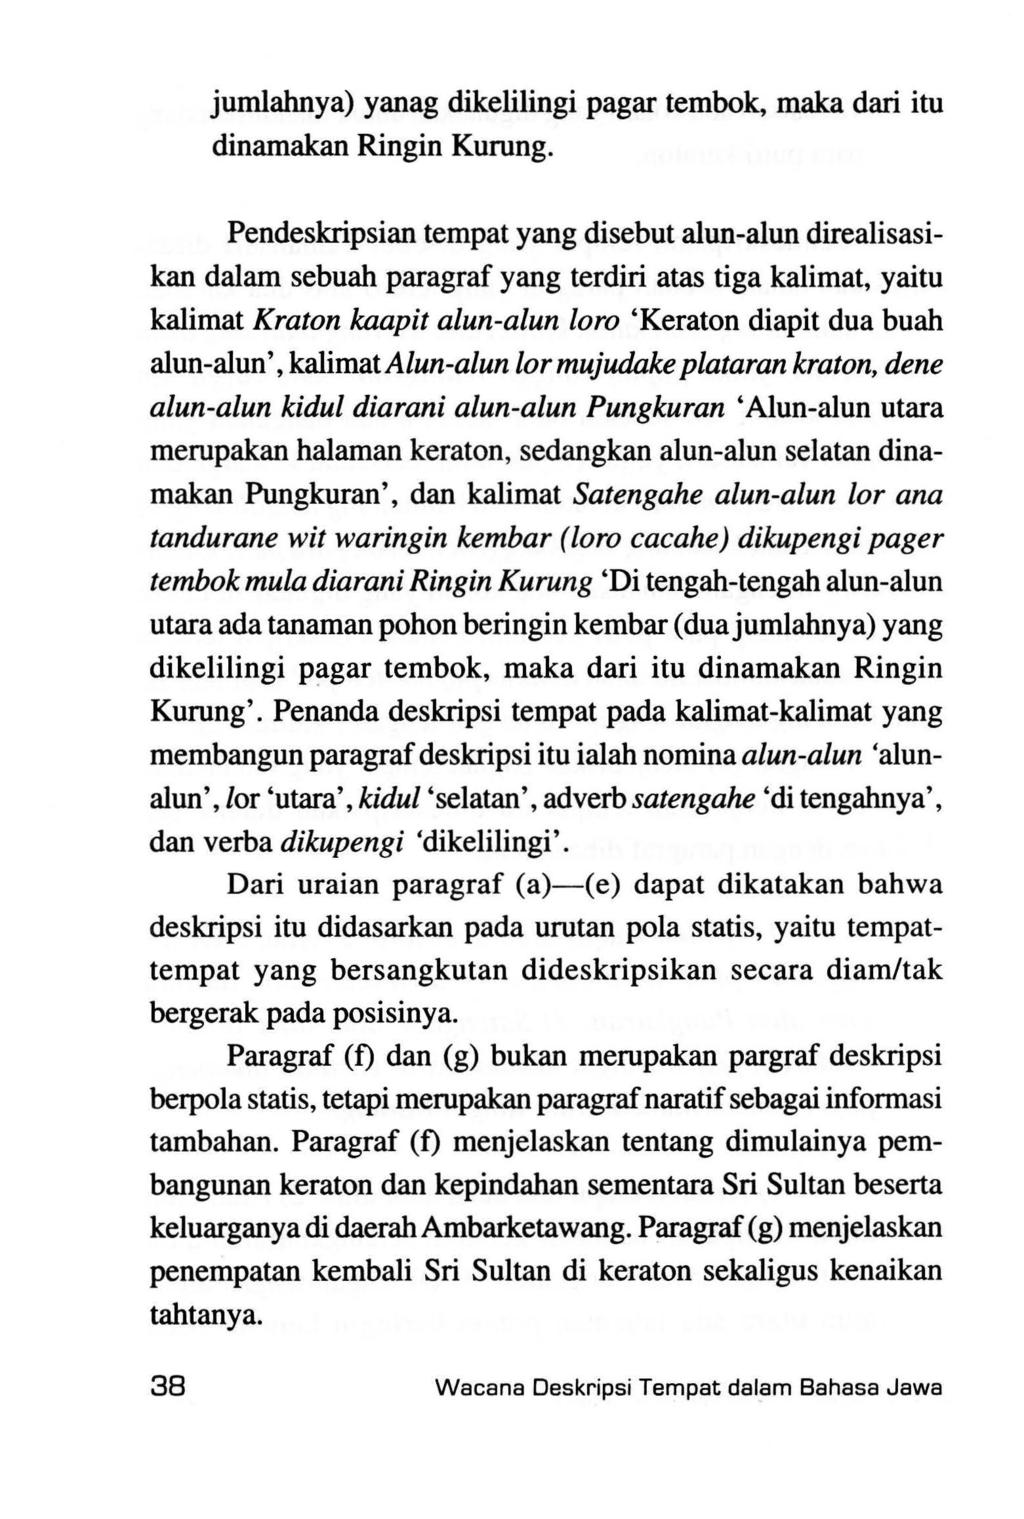 Wiwin Erni Siti Nurlina Wacana Deskripsi Gfempat Dalam Bahasa Jawa 1 I Pdf Free Download